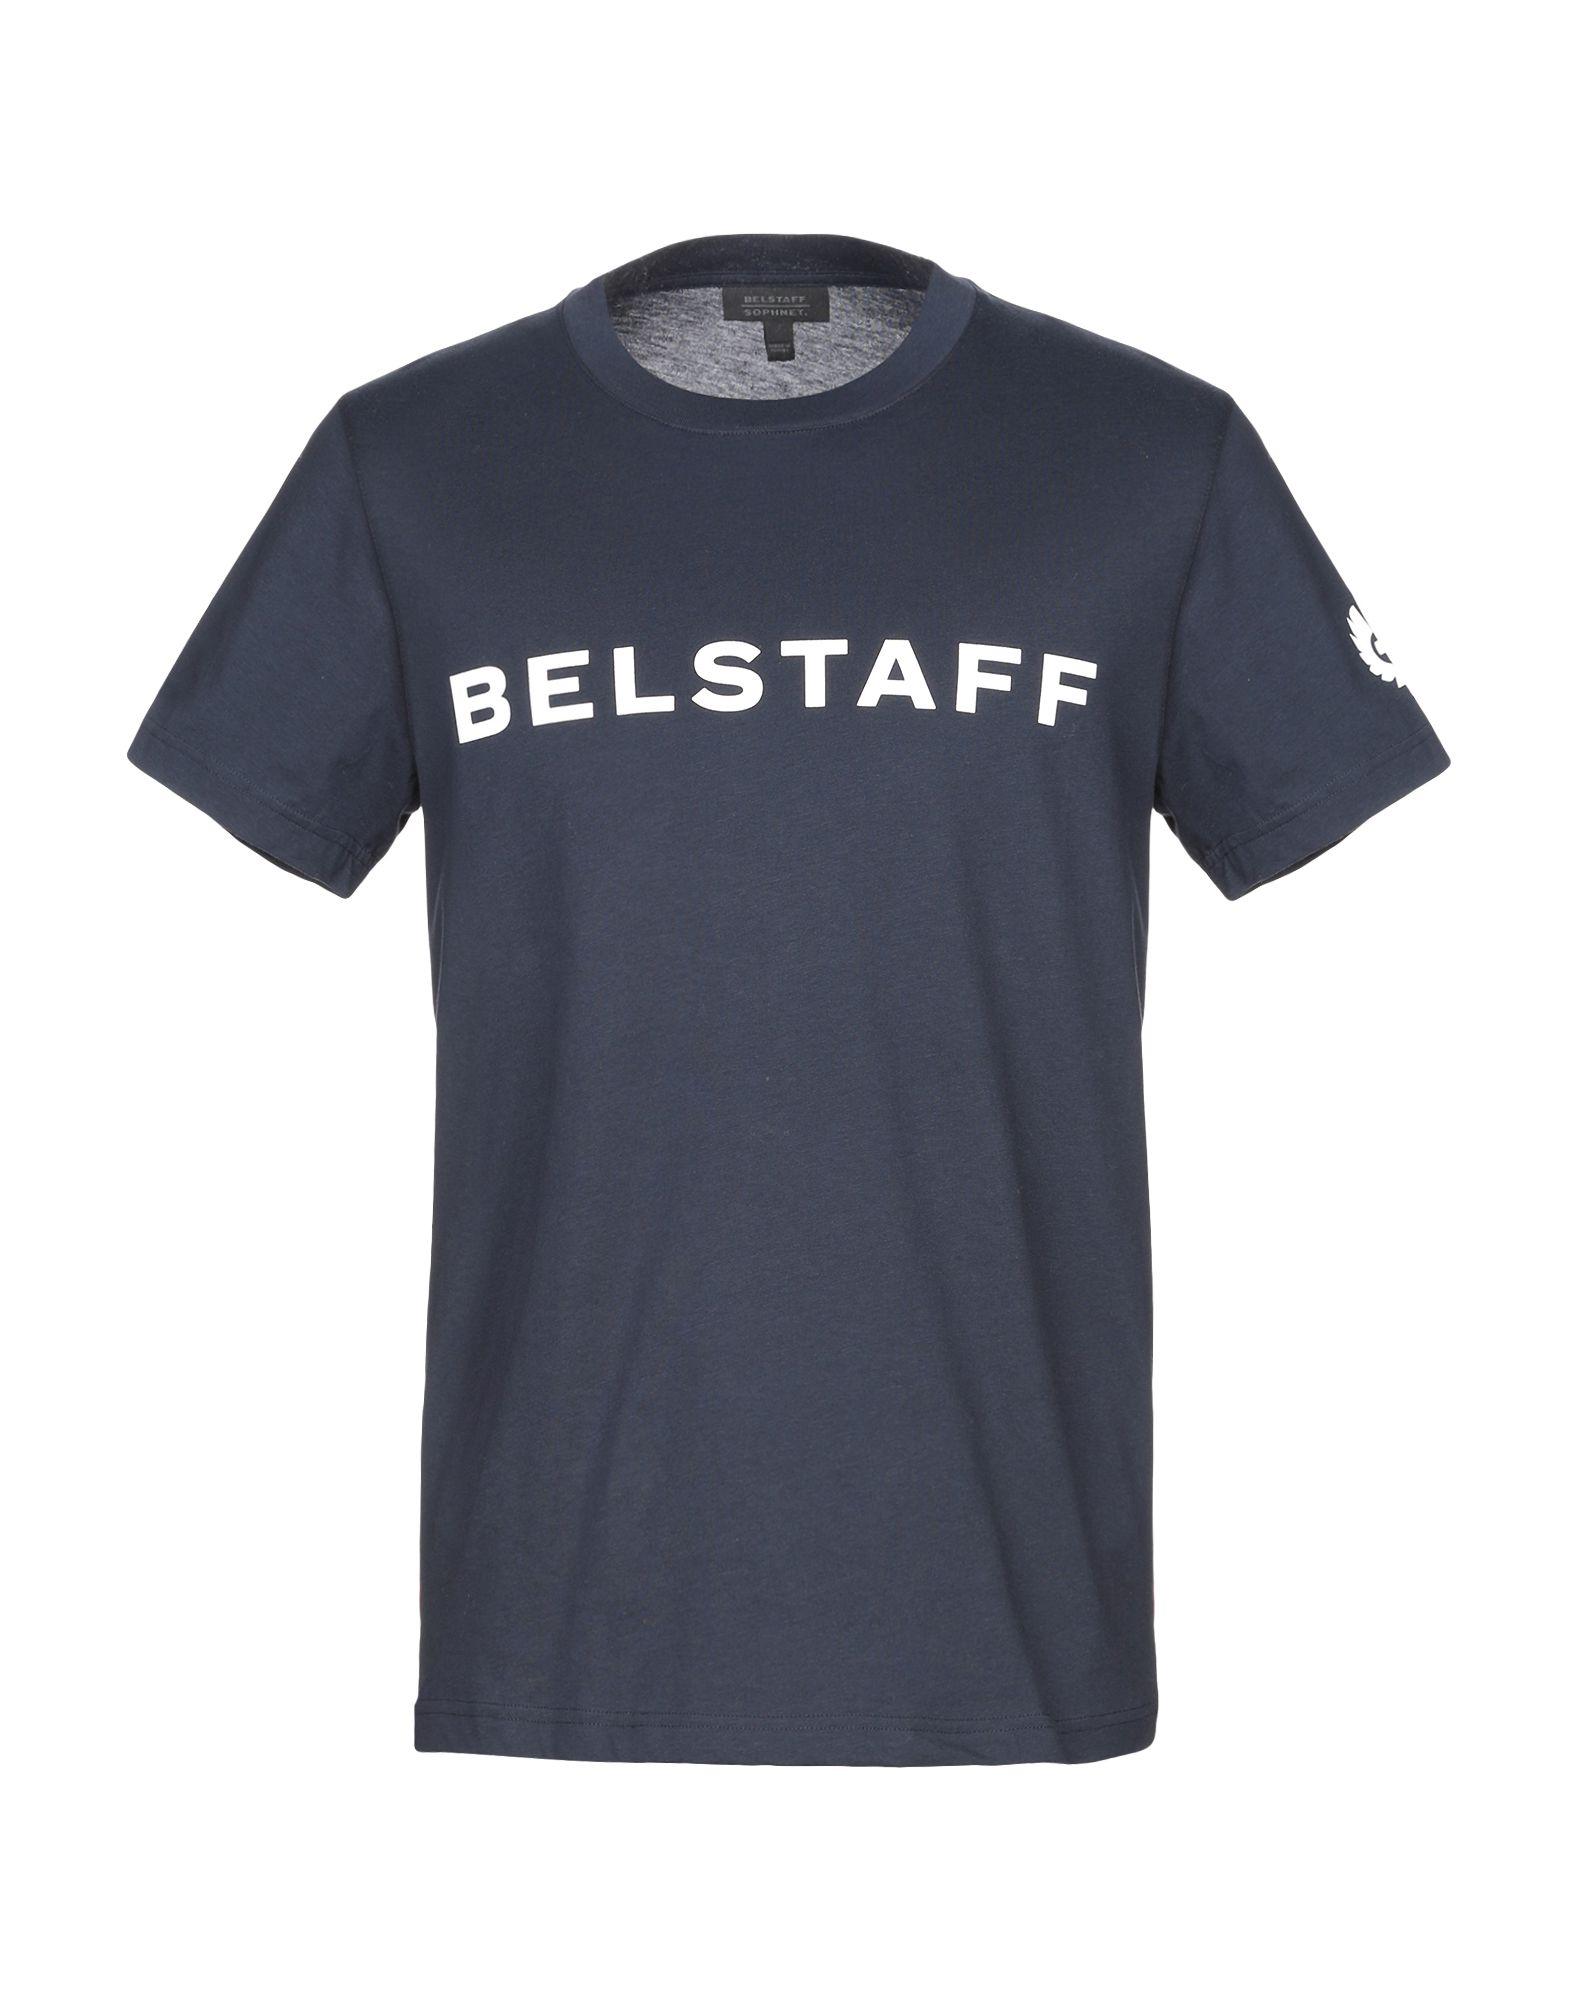 Belstaff T-shirt in Blue for Men - Lyst